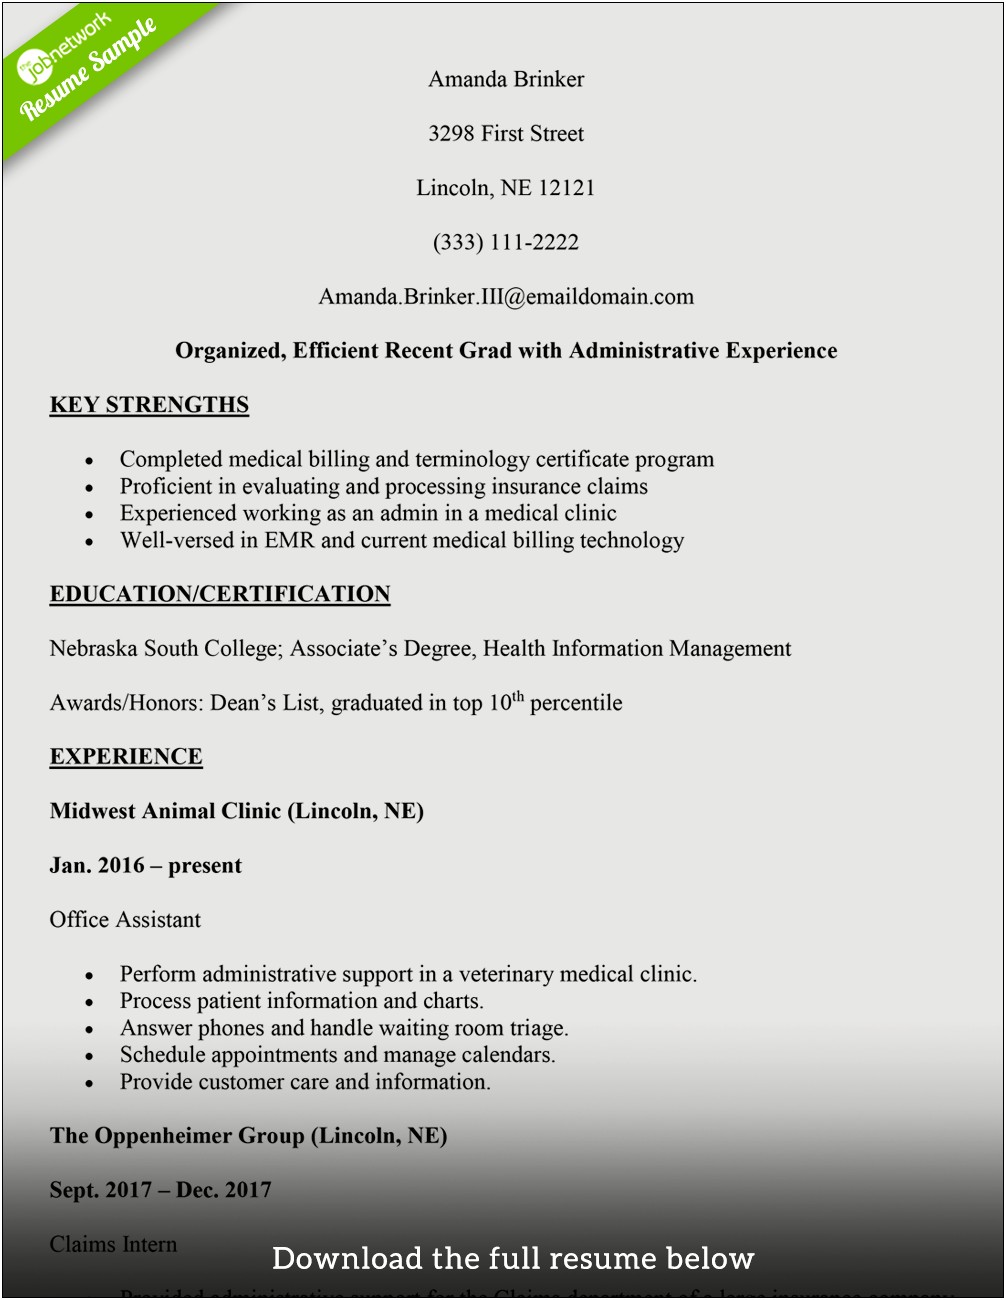 Medical Coding Jobs Sample Resume